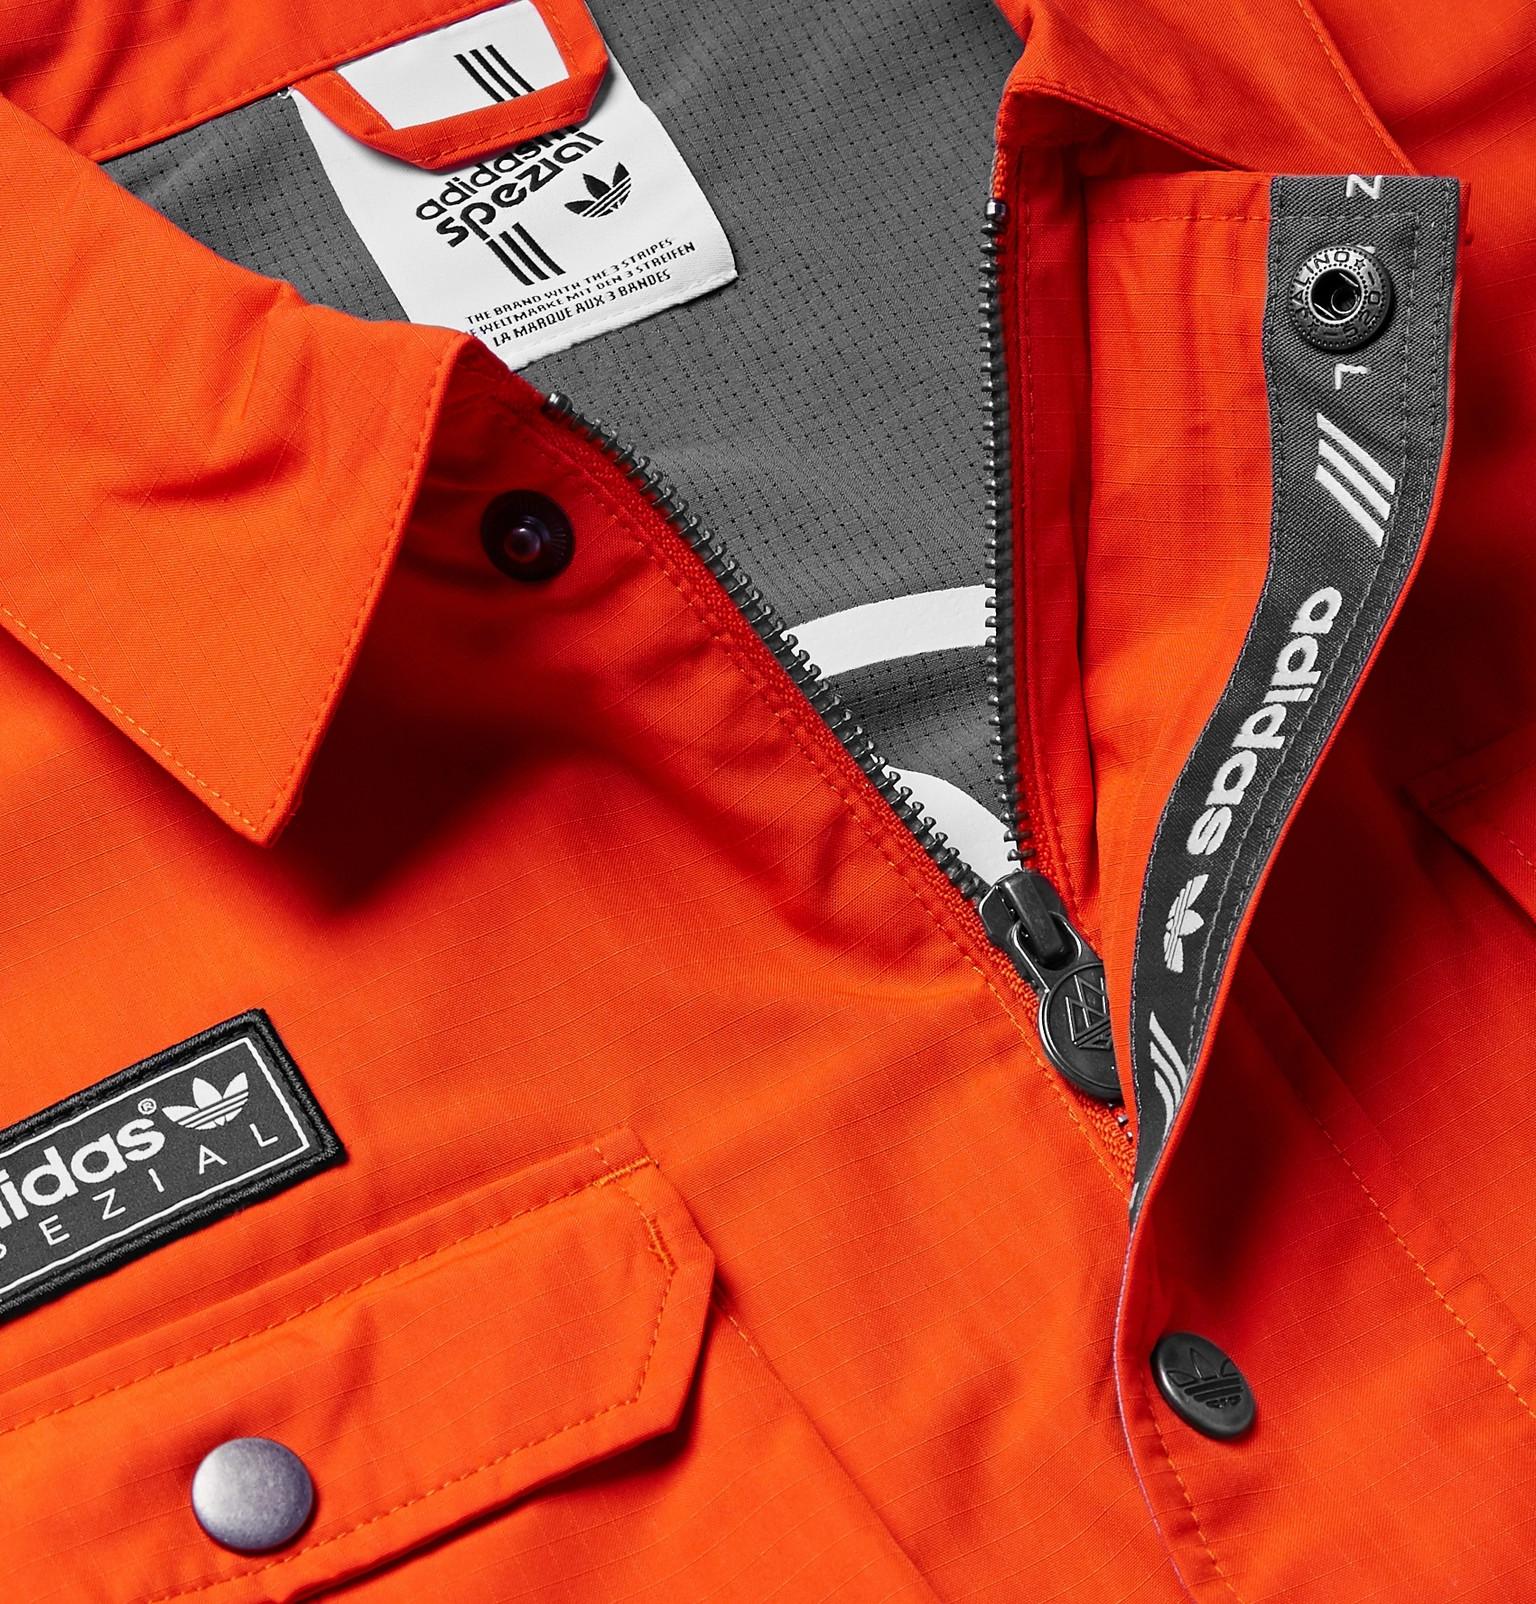 orange spezial jacket